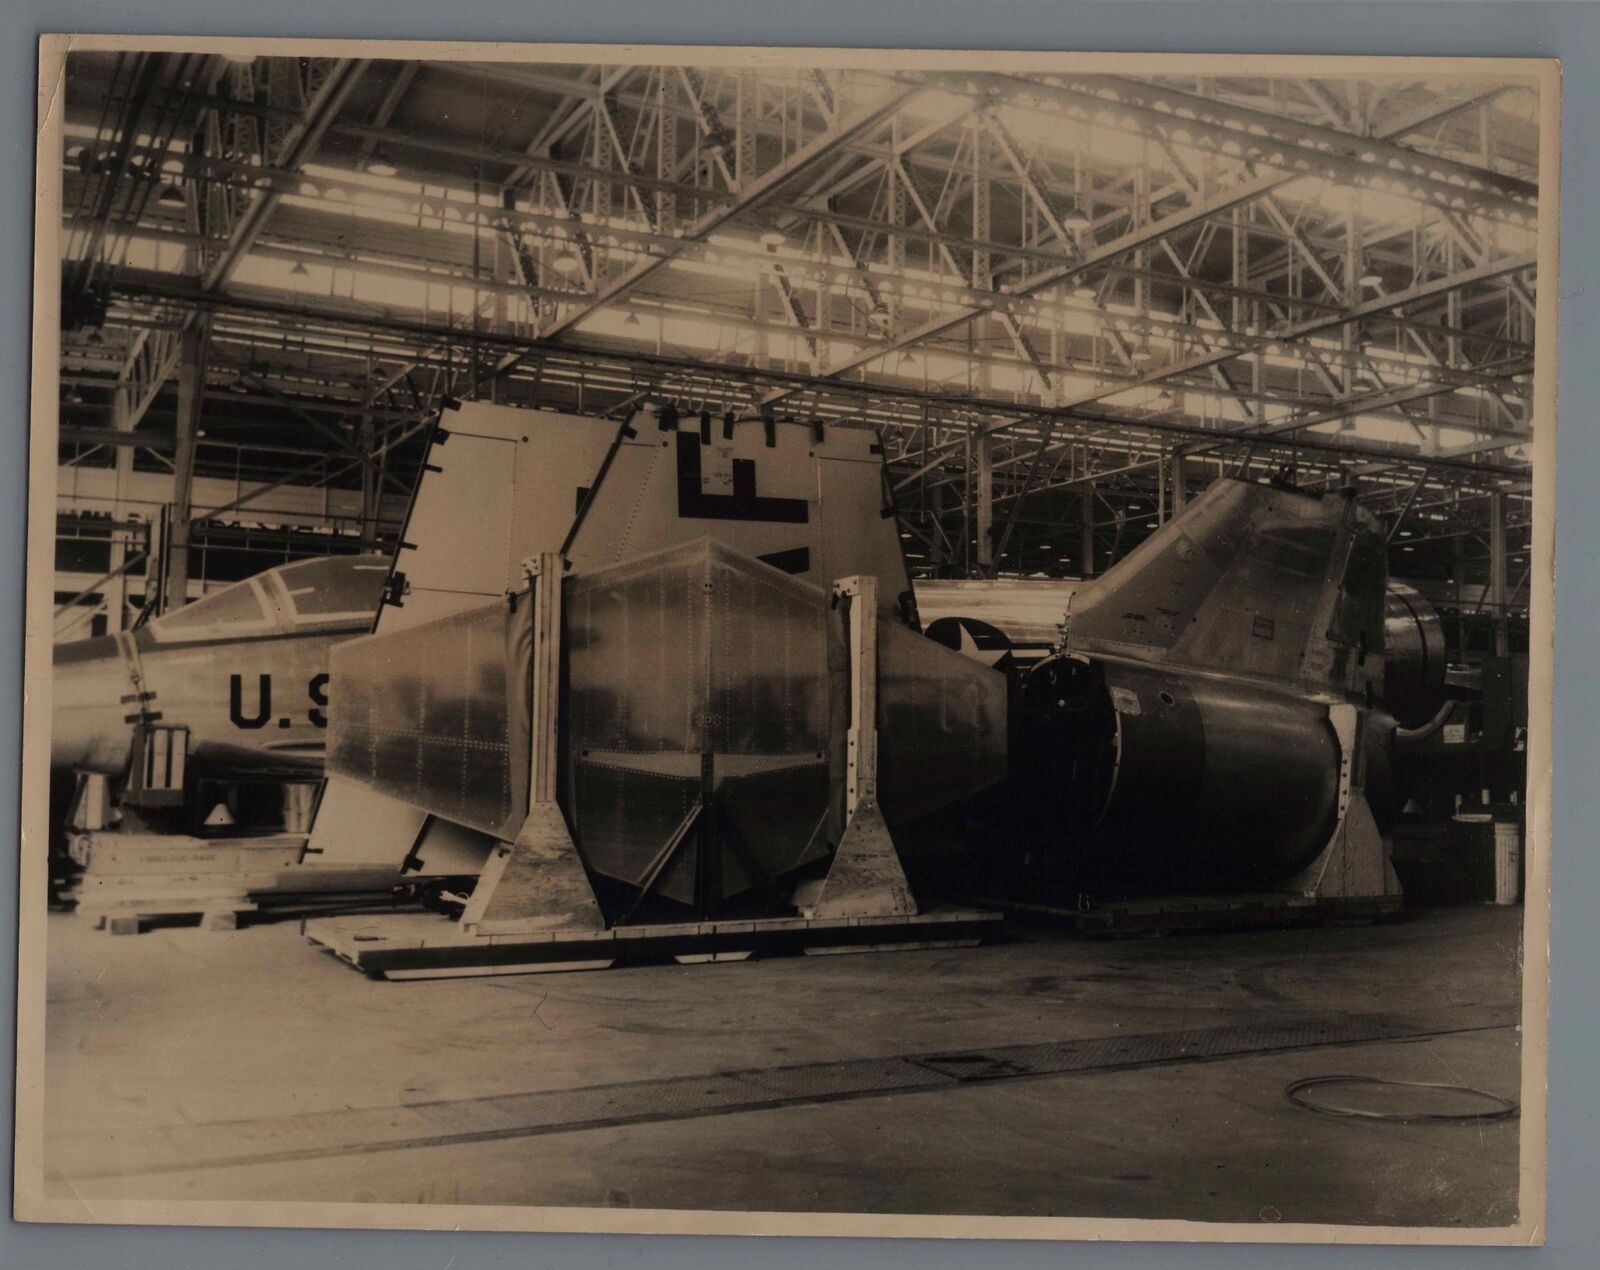 LOCKHEED F-104A STARFIGHTER JETS PRODUCTION BURBANK VINTAGE 1958 PRESS PHOTO